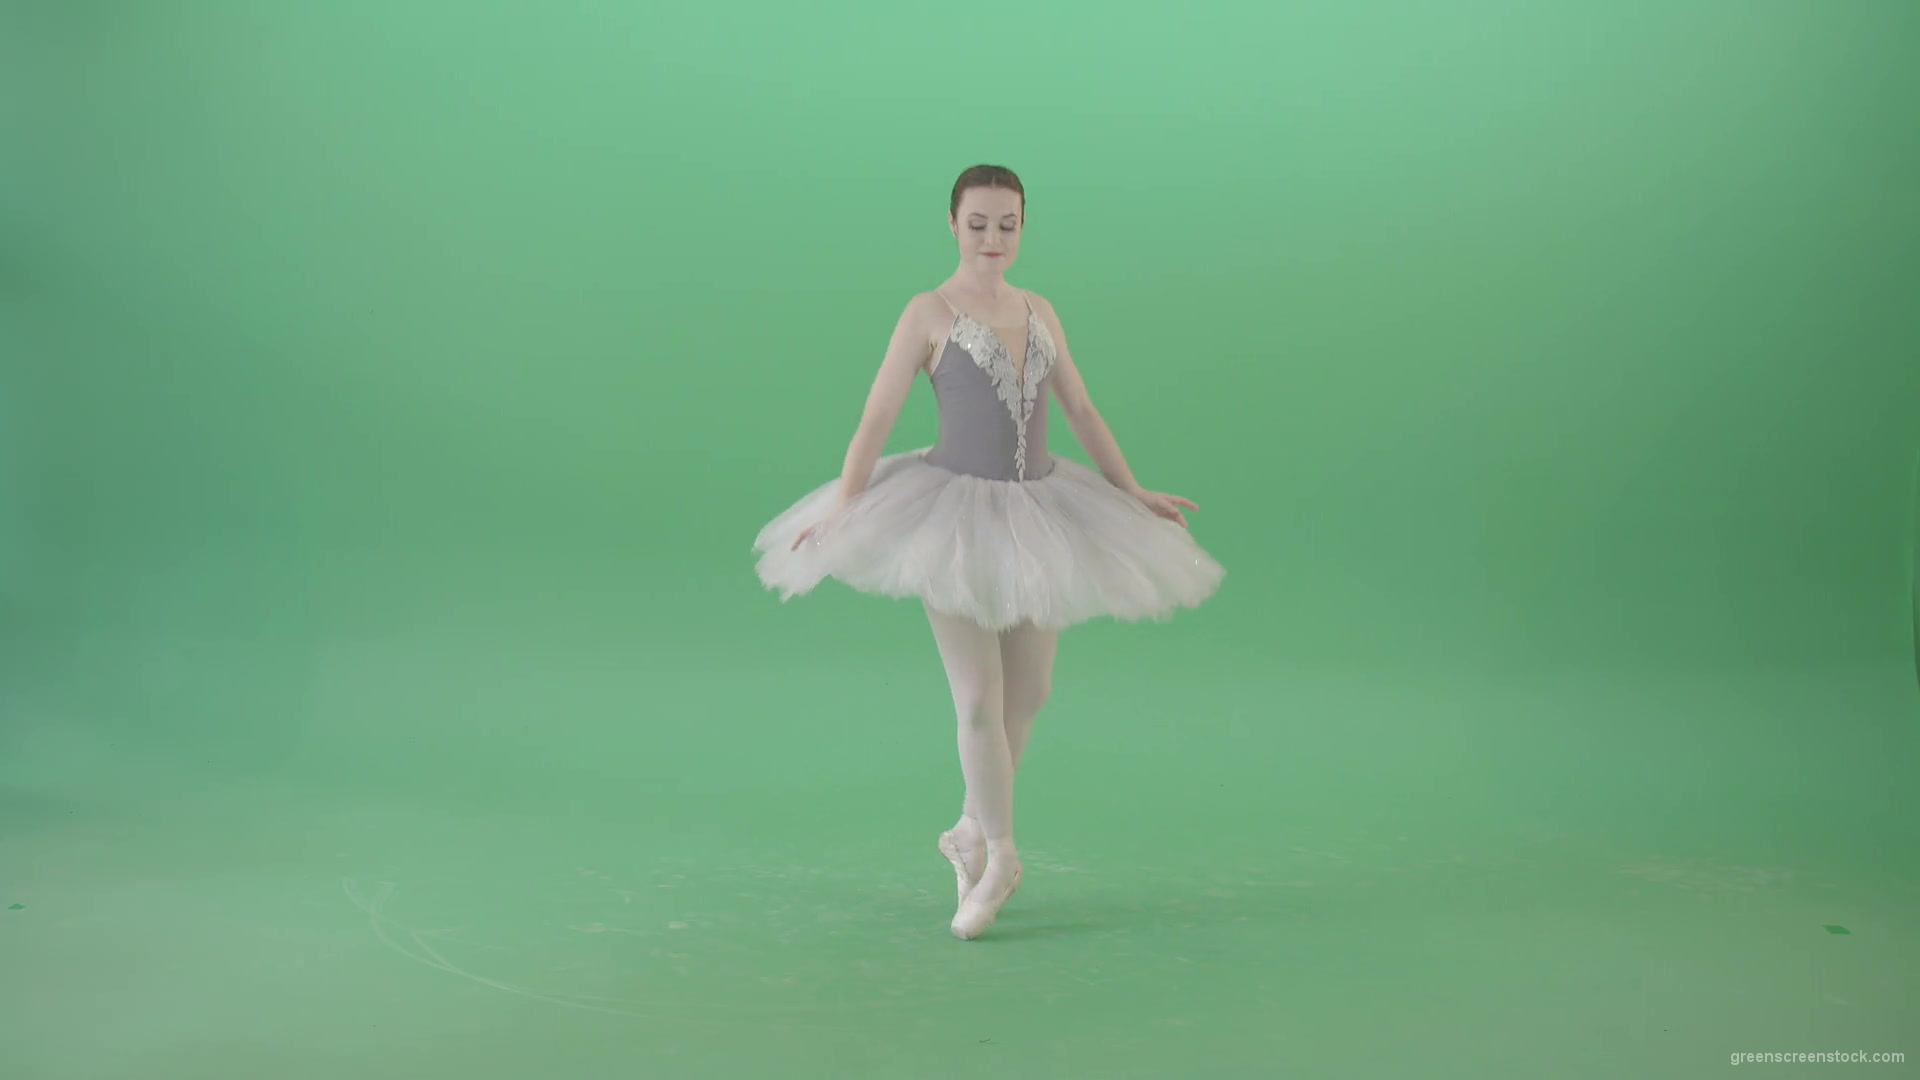 Ballerina-Woman-dancing-elegnatly-ballet-swan-lake-dance-in-green-screen-studio-4K-Video-Footage-1920_002 Green Screen Stock